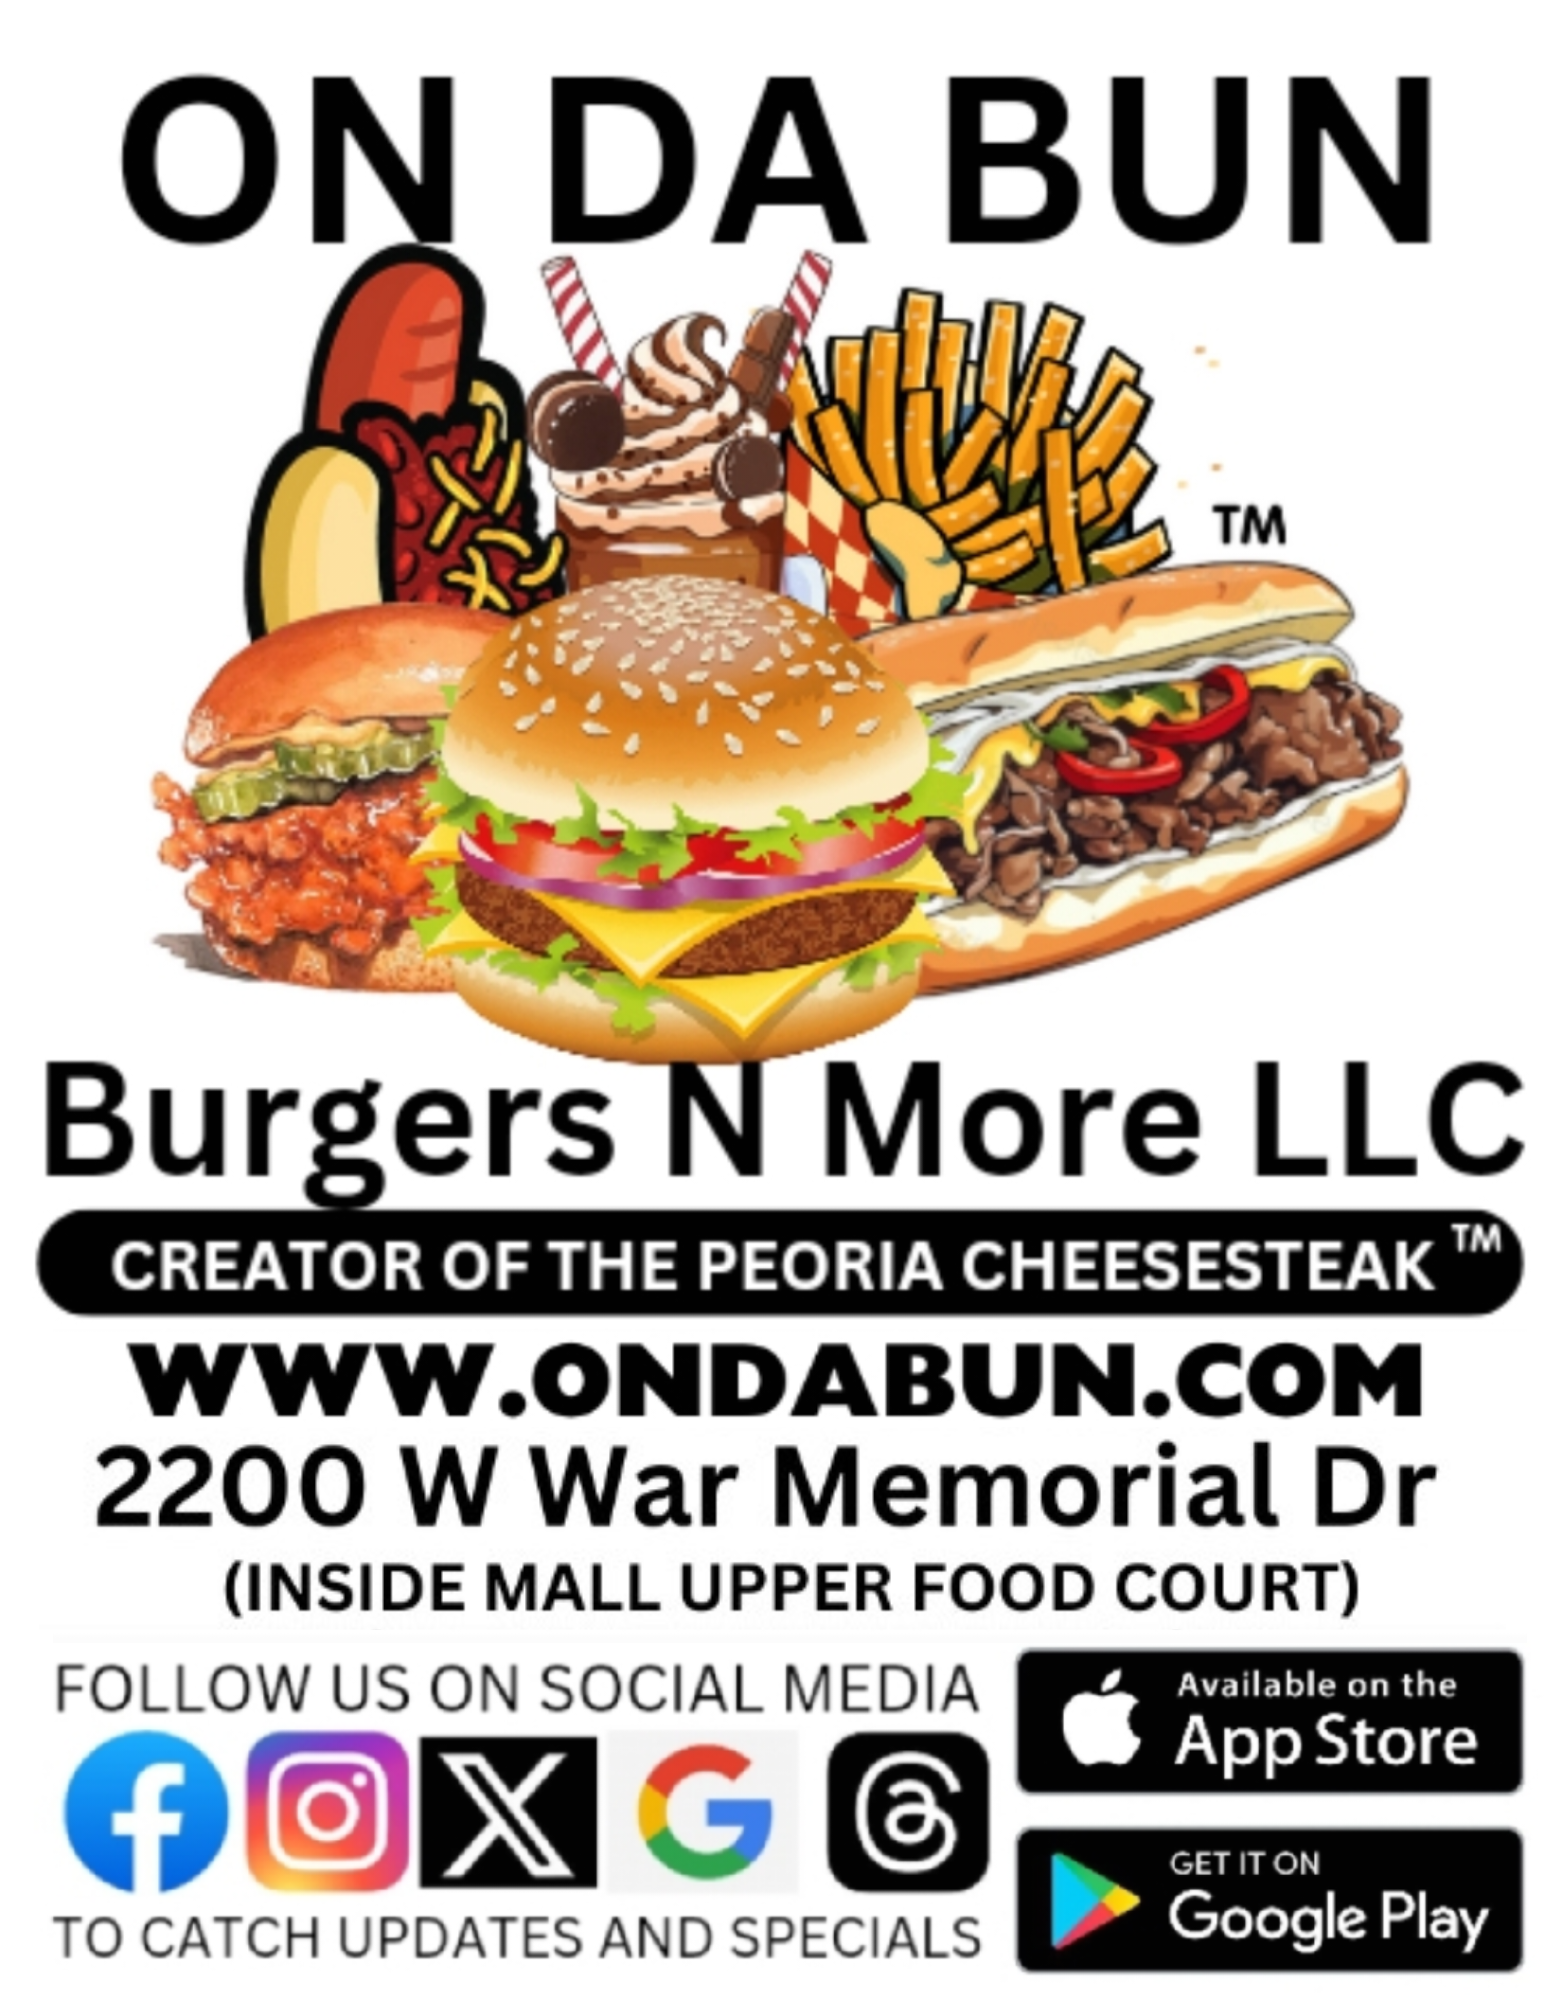 ON DA BUN Burgers N More LLC food truck profile image